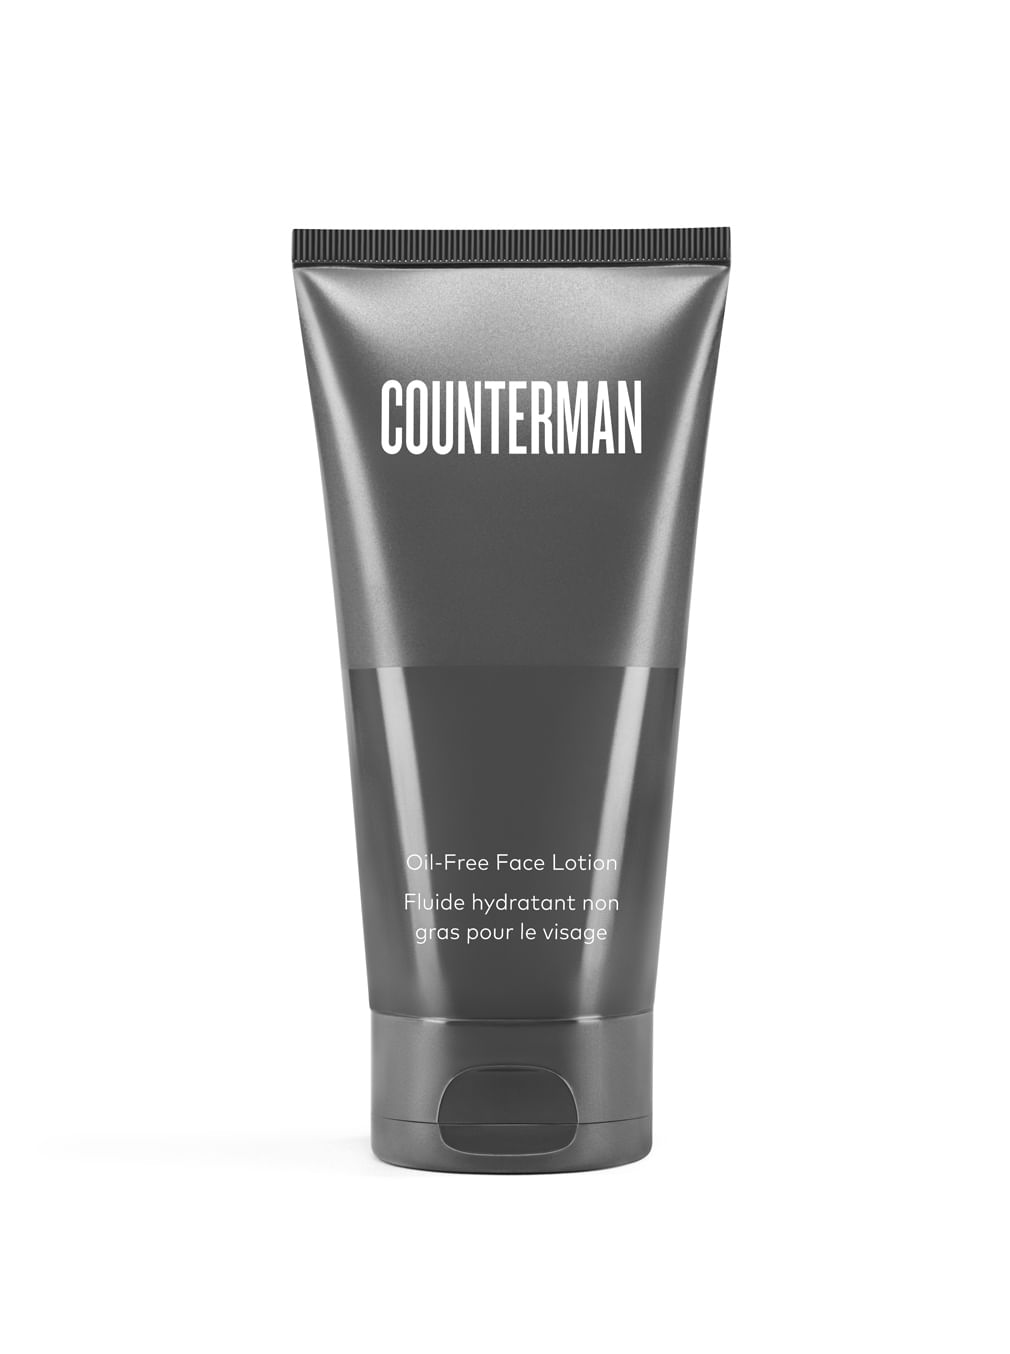 Counterman Oil-Free Face Lotion - Beautycounter